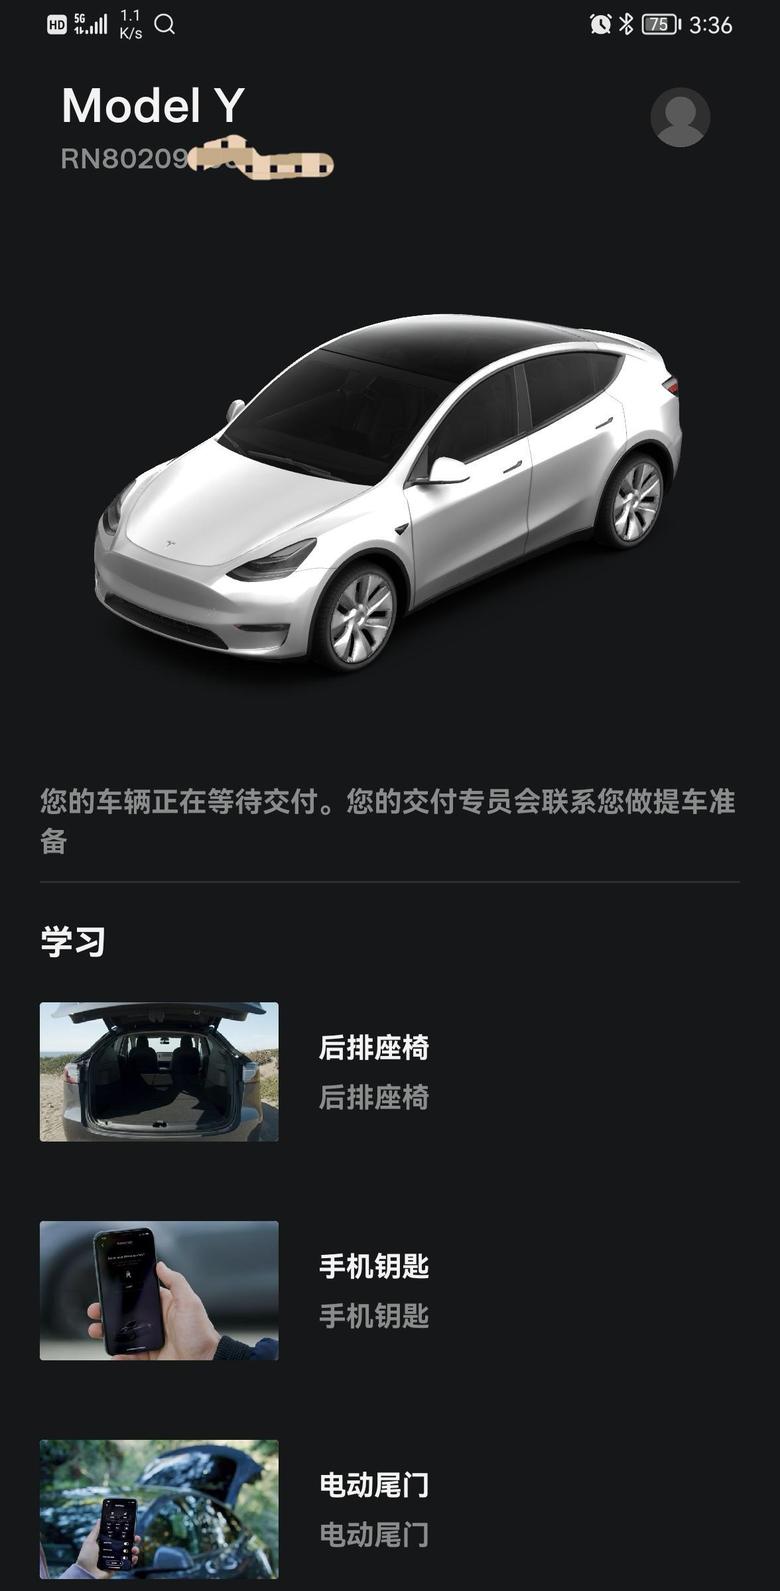 model y 求教诸位车友，杭州209标白，19轮，元旦前能提车吗？听说12月底前要把5.6的订单全部交付完，是真的吗？